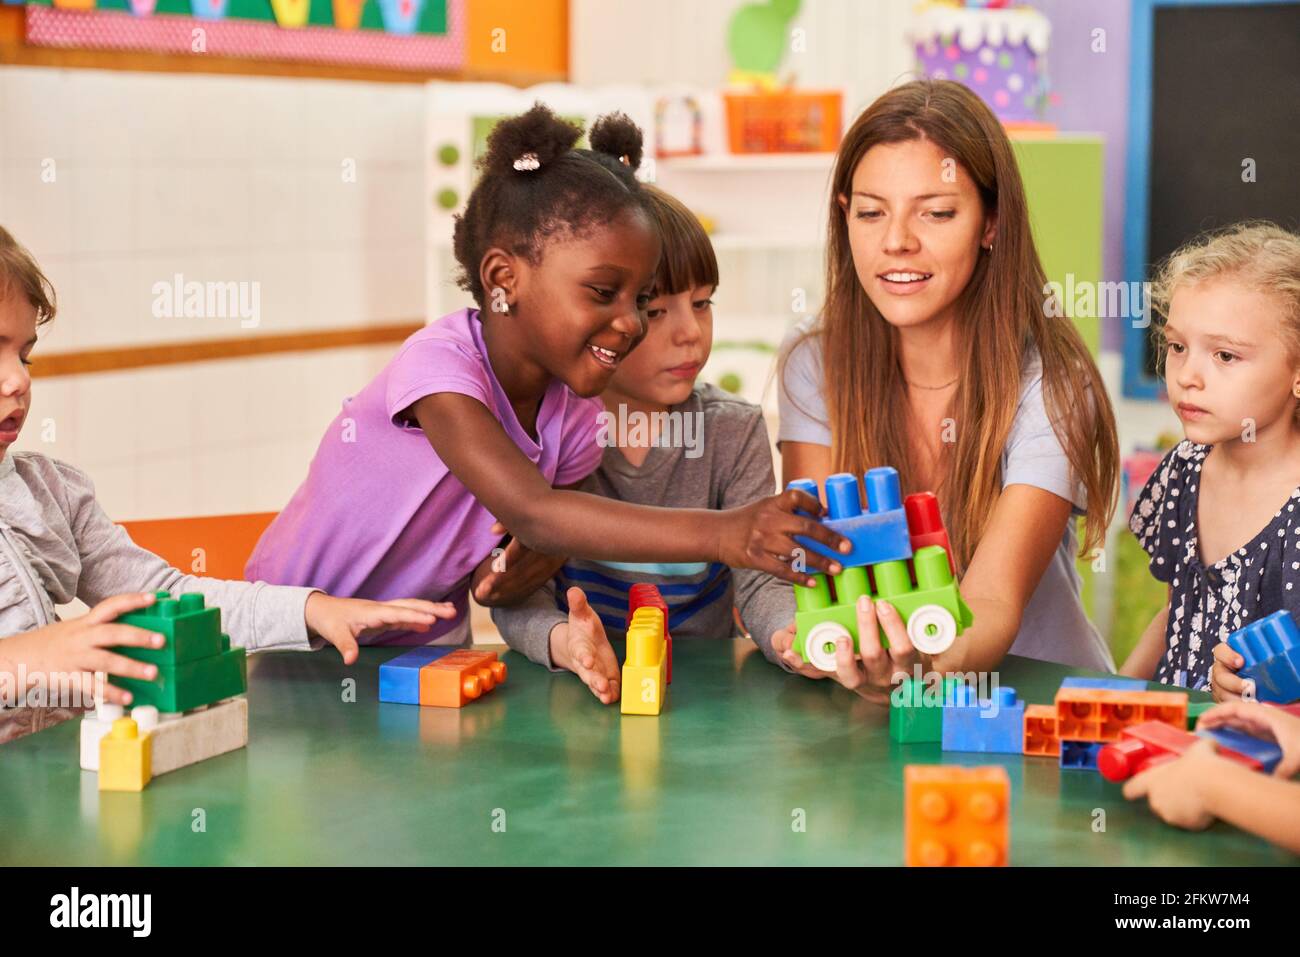 Children play together with building blocks in the international kindergarten with a kindergarten teacher Stock Photo